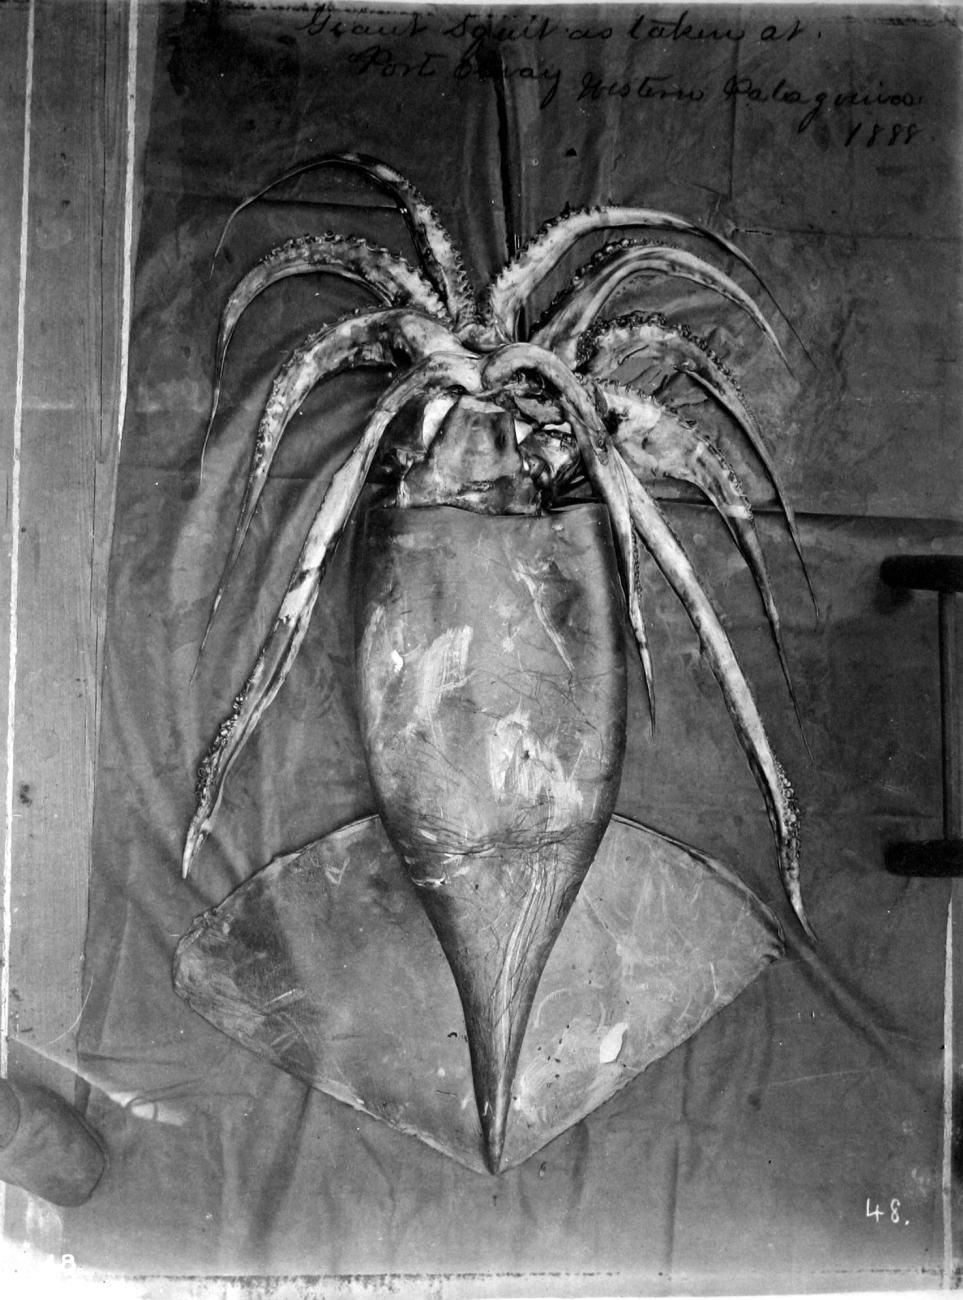 Giant squid as taken at Port Otway, western Patagonia, 1888